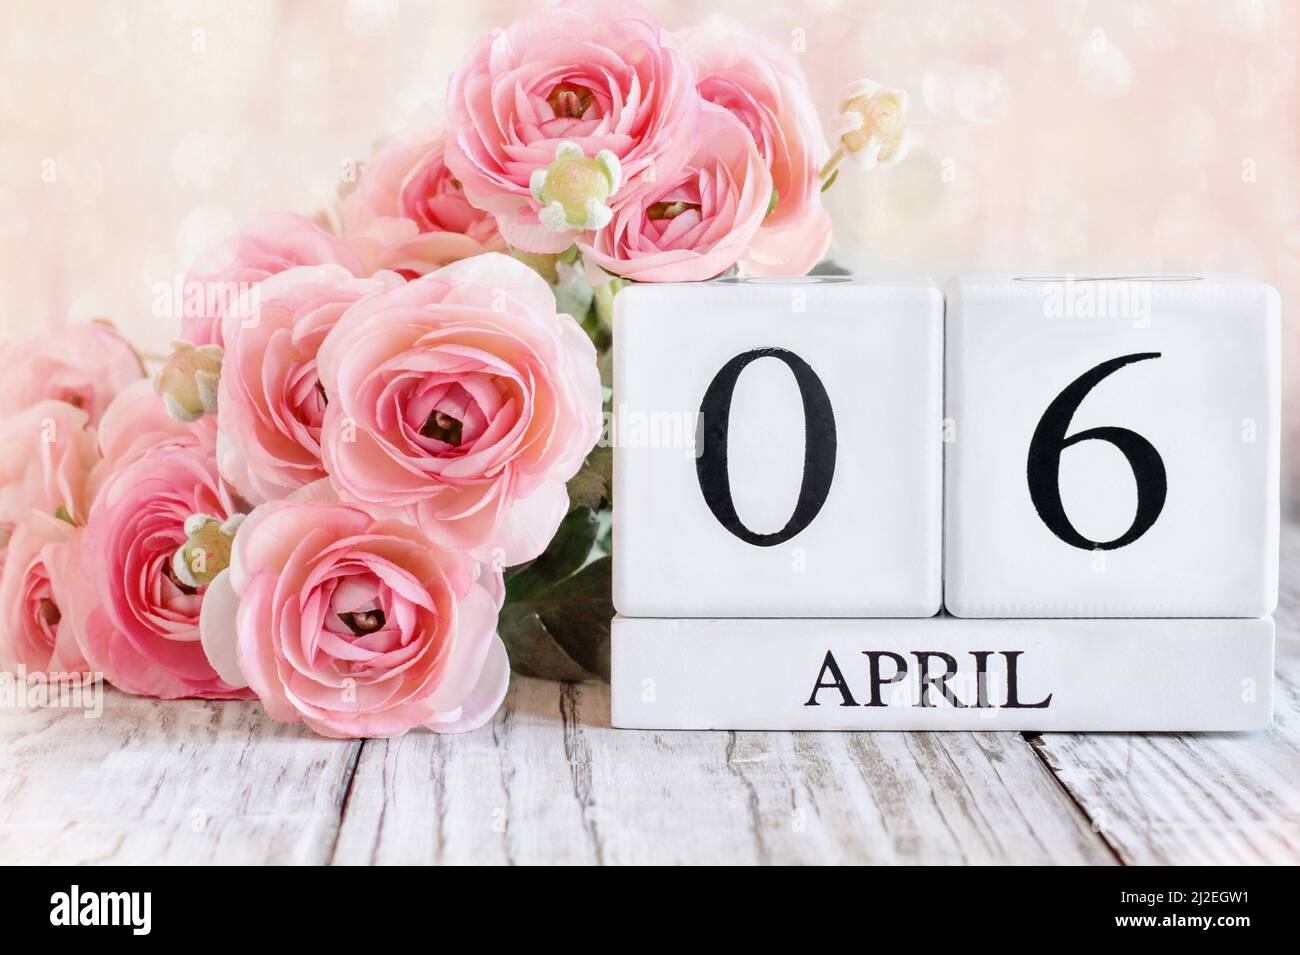 Bloques de calendario de madera blanca con fecha del 6th de abril. Enfoque selectivo con fondo borroso. Foto de stock